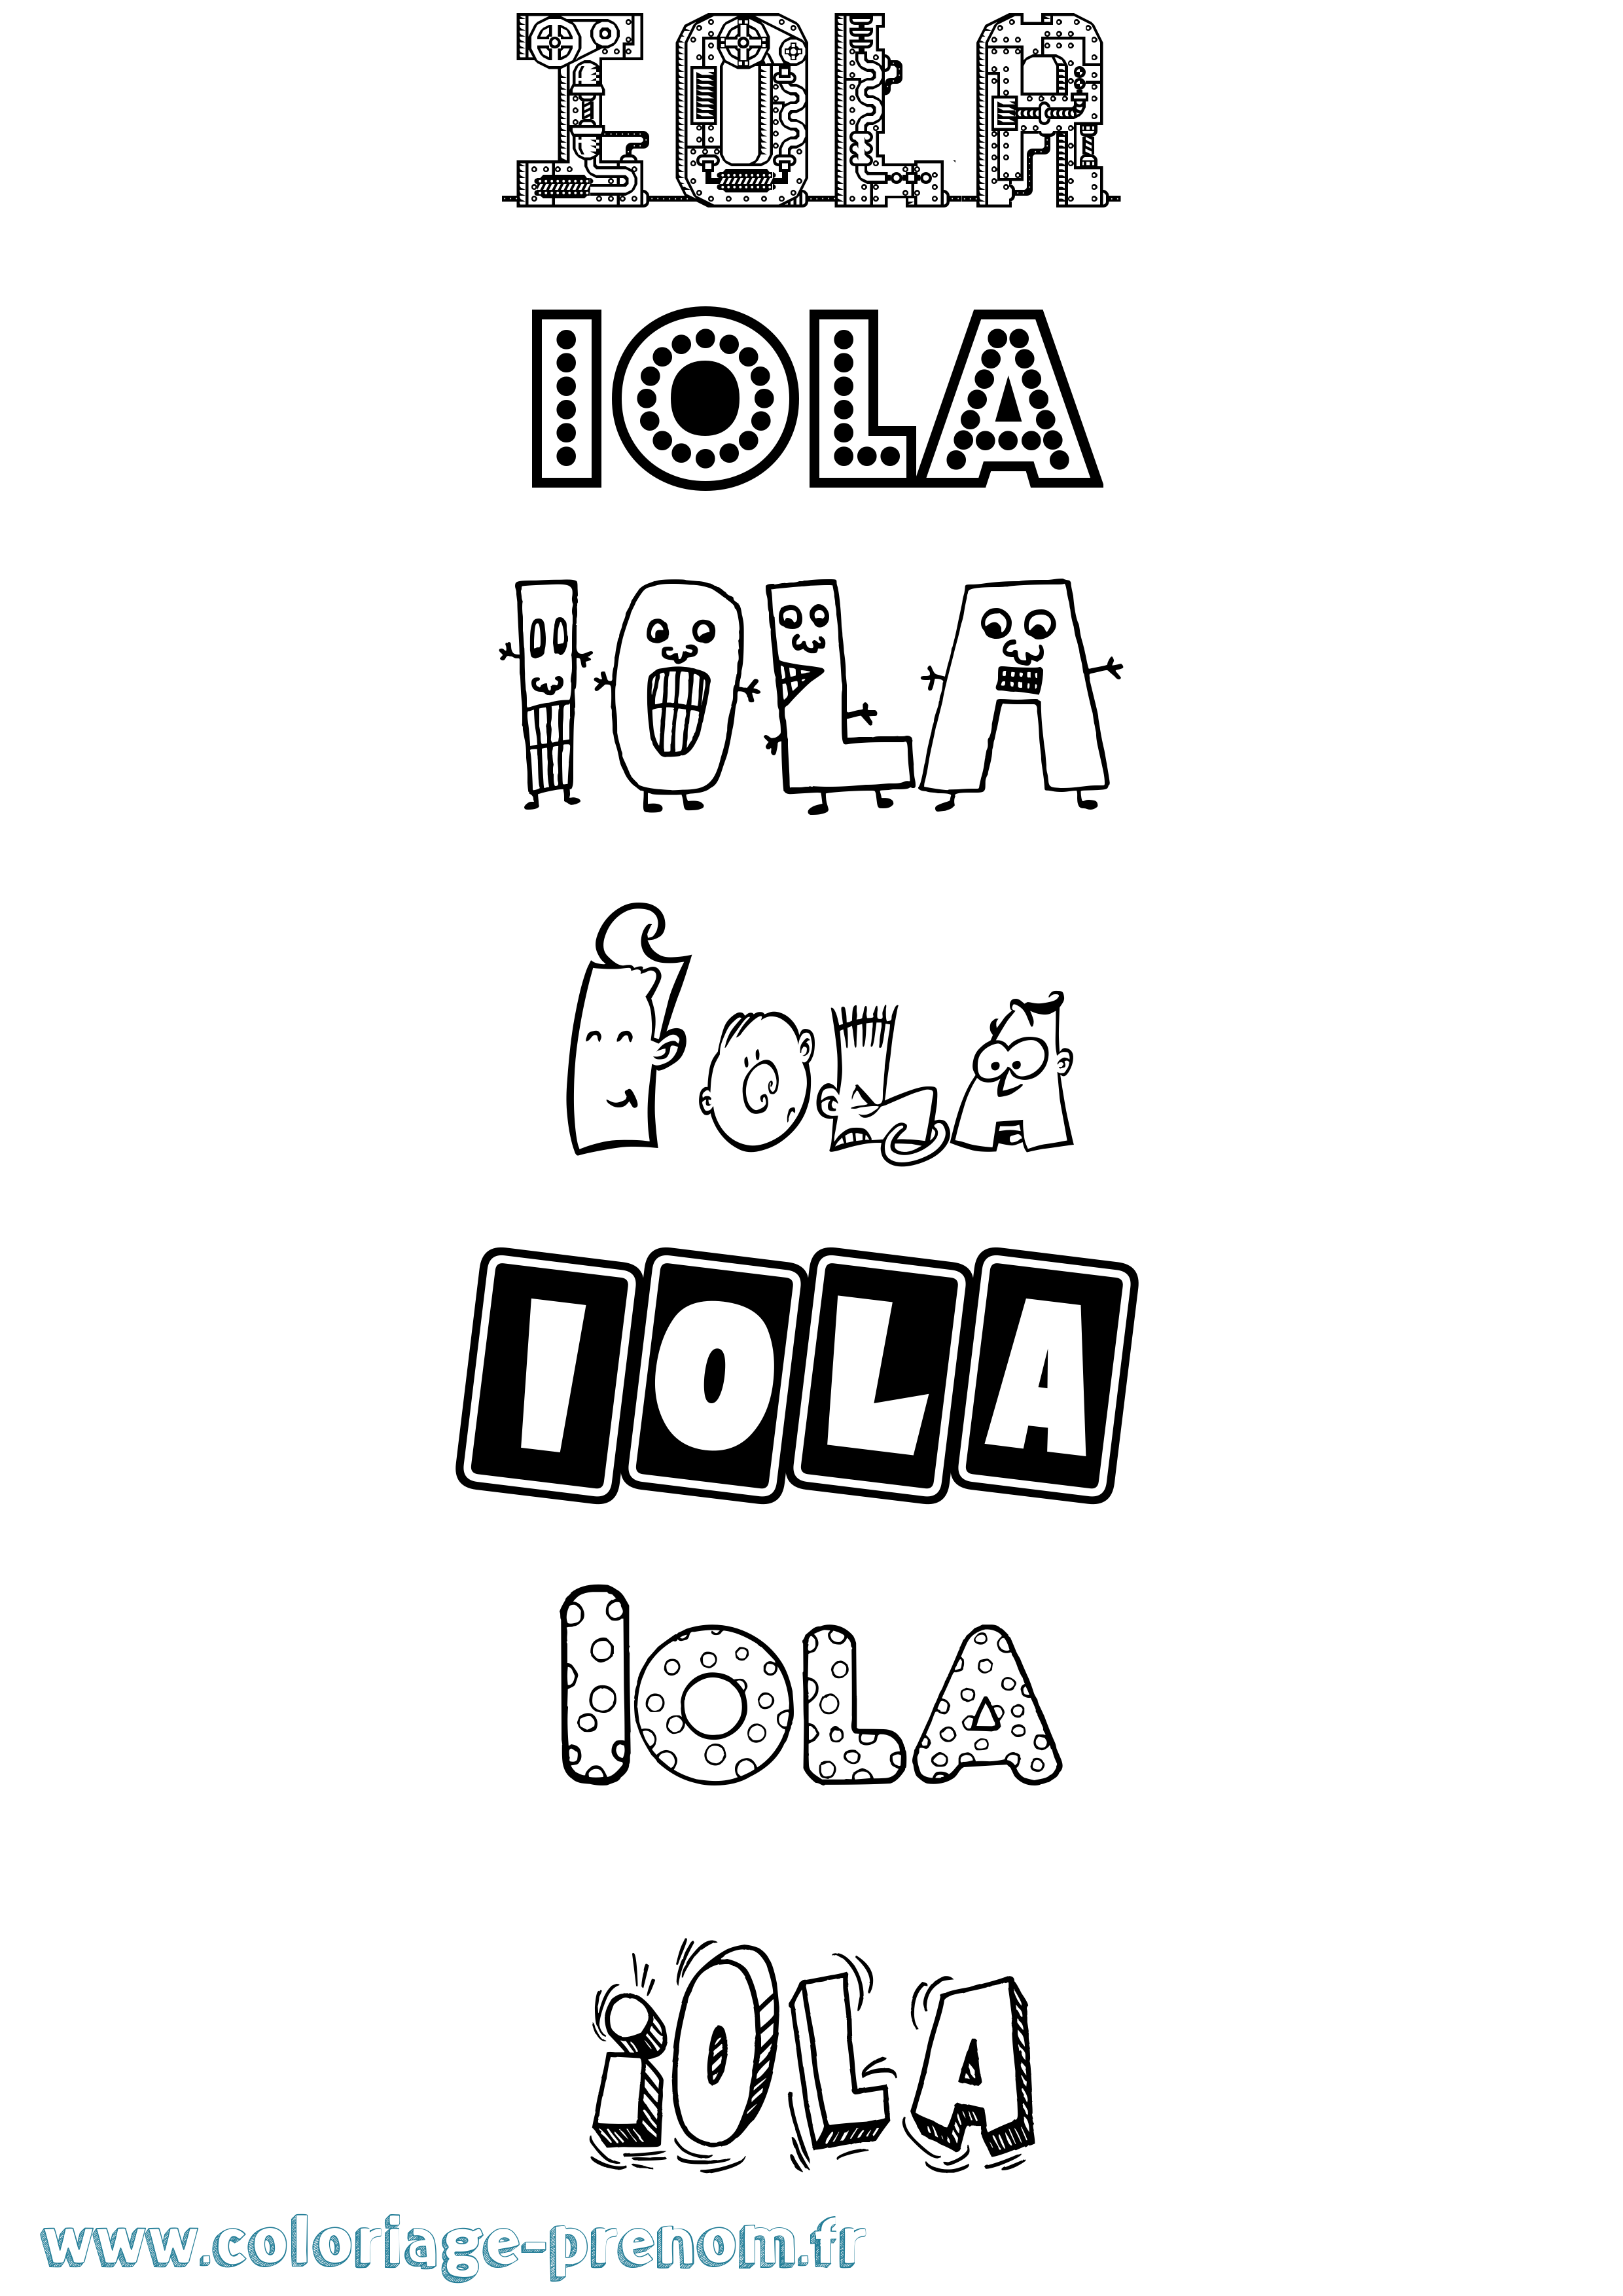 Coloriage prénom Iola Fun